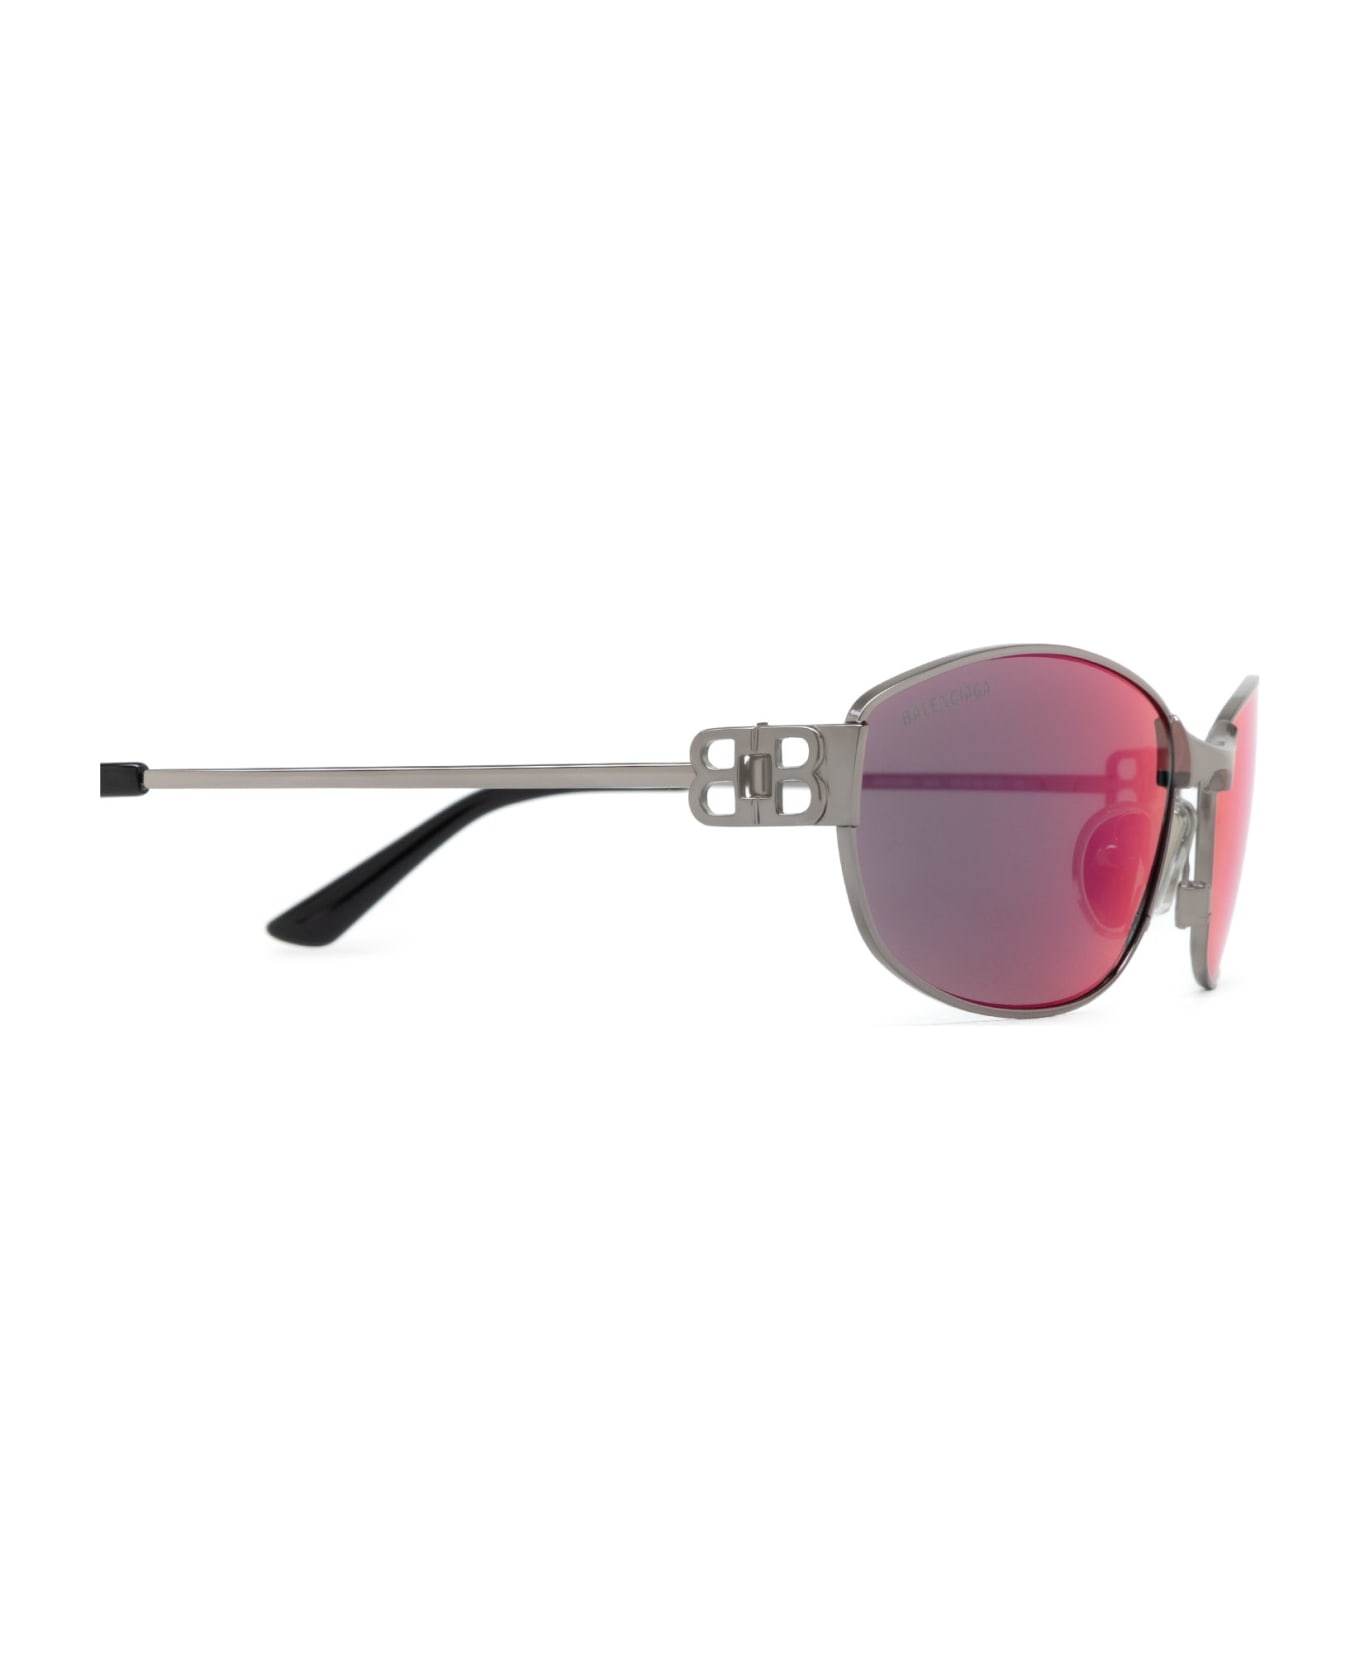 Balenciaga Eyewear Bb0336s Sunglasses - Ruthenium サングラス